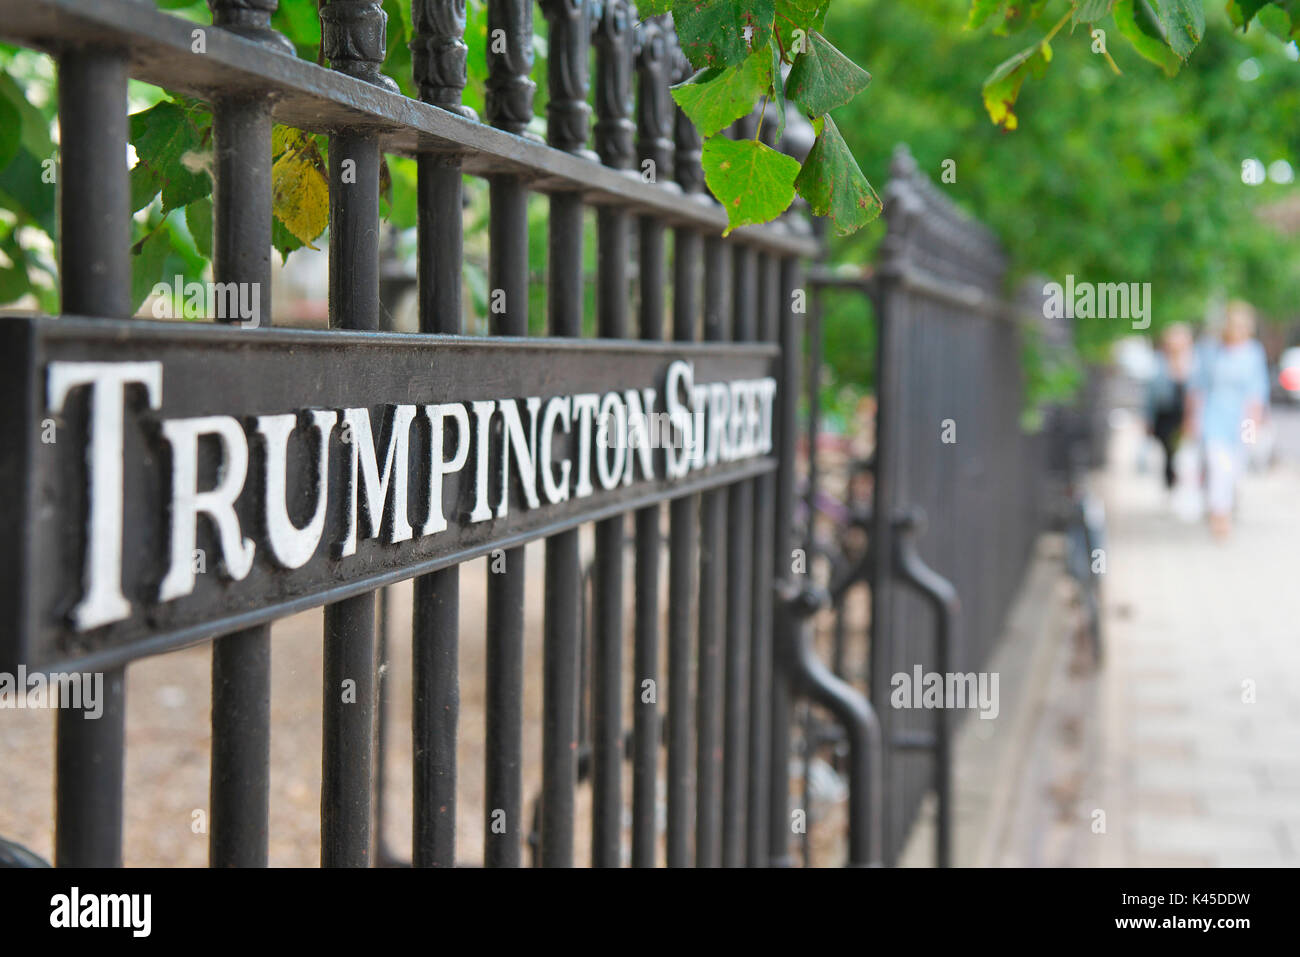 Trumpington Street sign in Cambridge city centre along the black railings Stock Photo